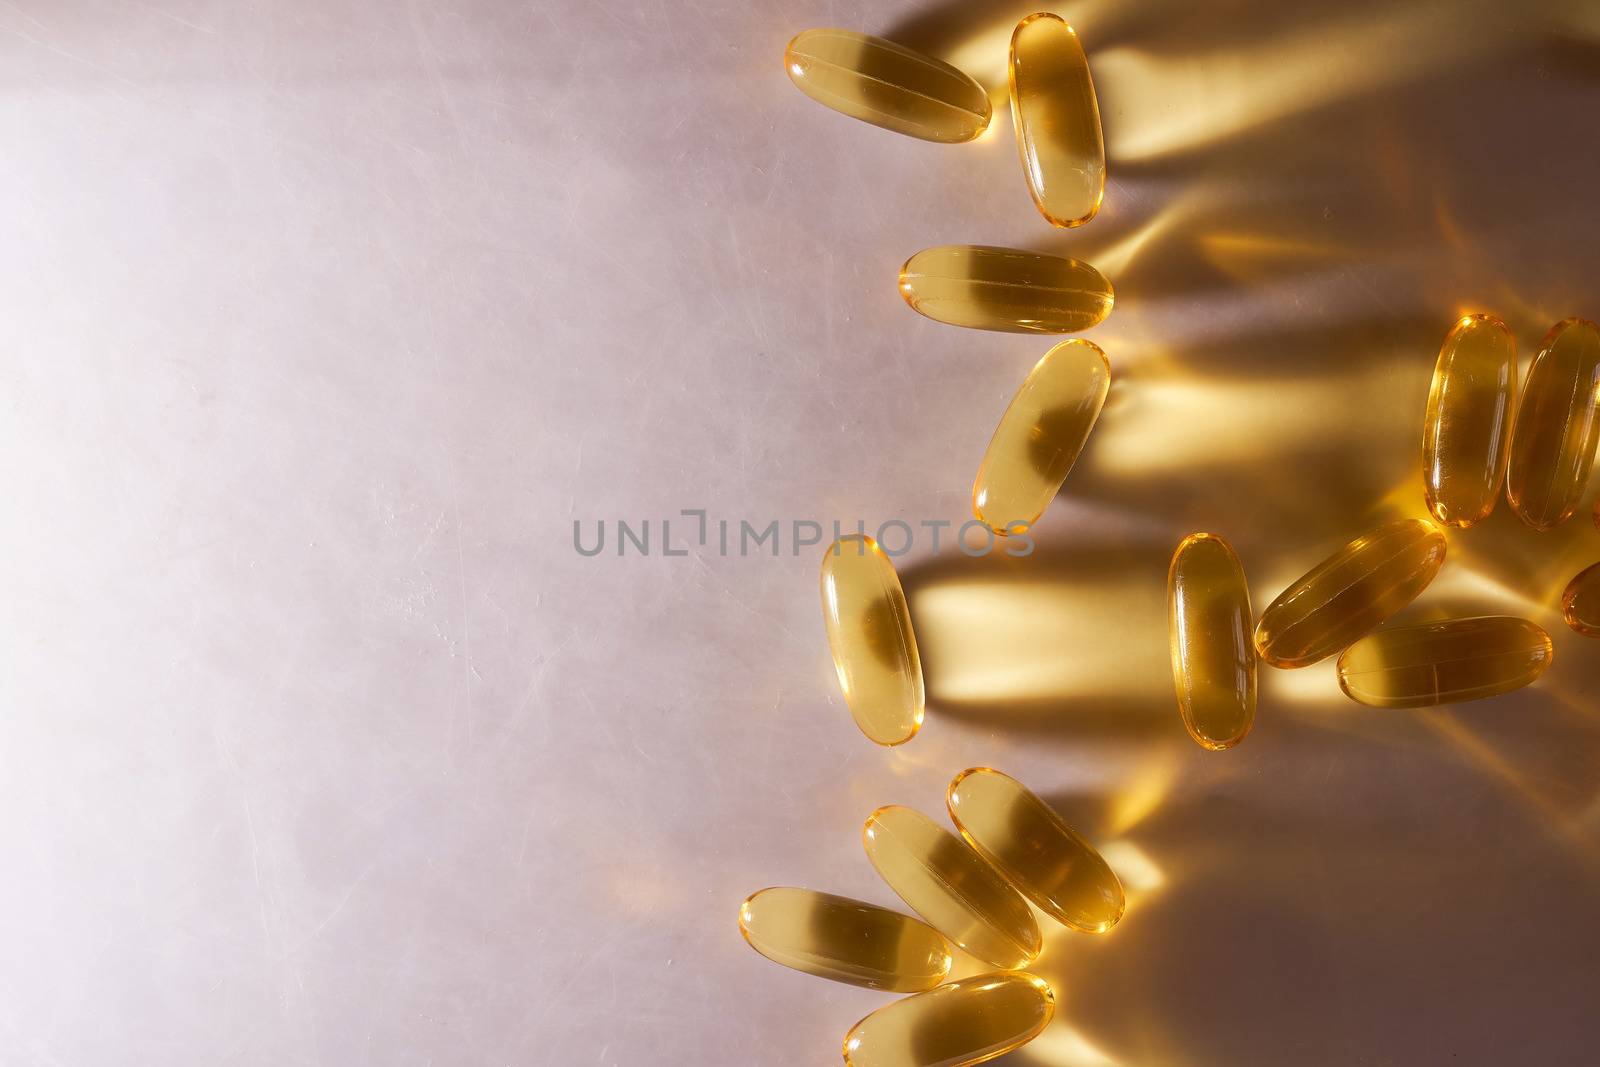 Golden Capsules Omega 3 Vitamins Lie On White Background. High quality photo